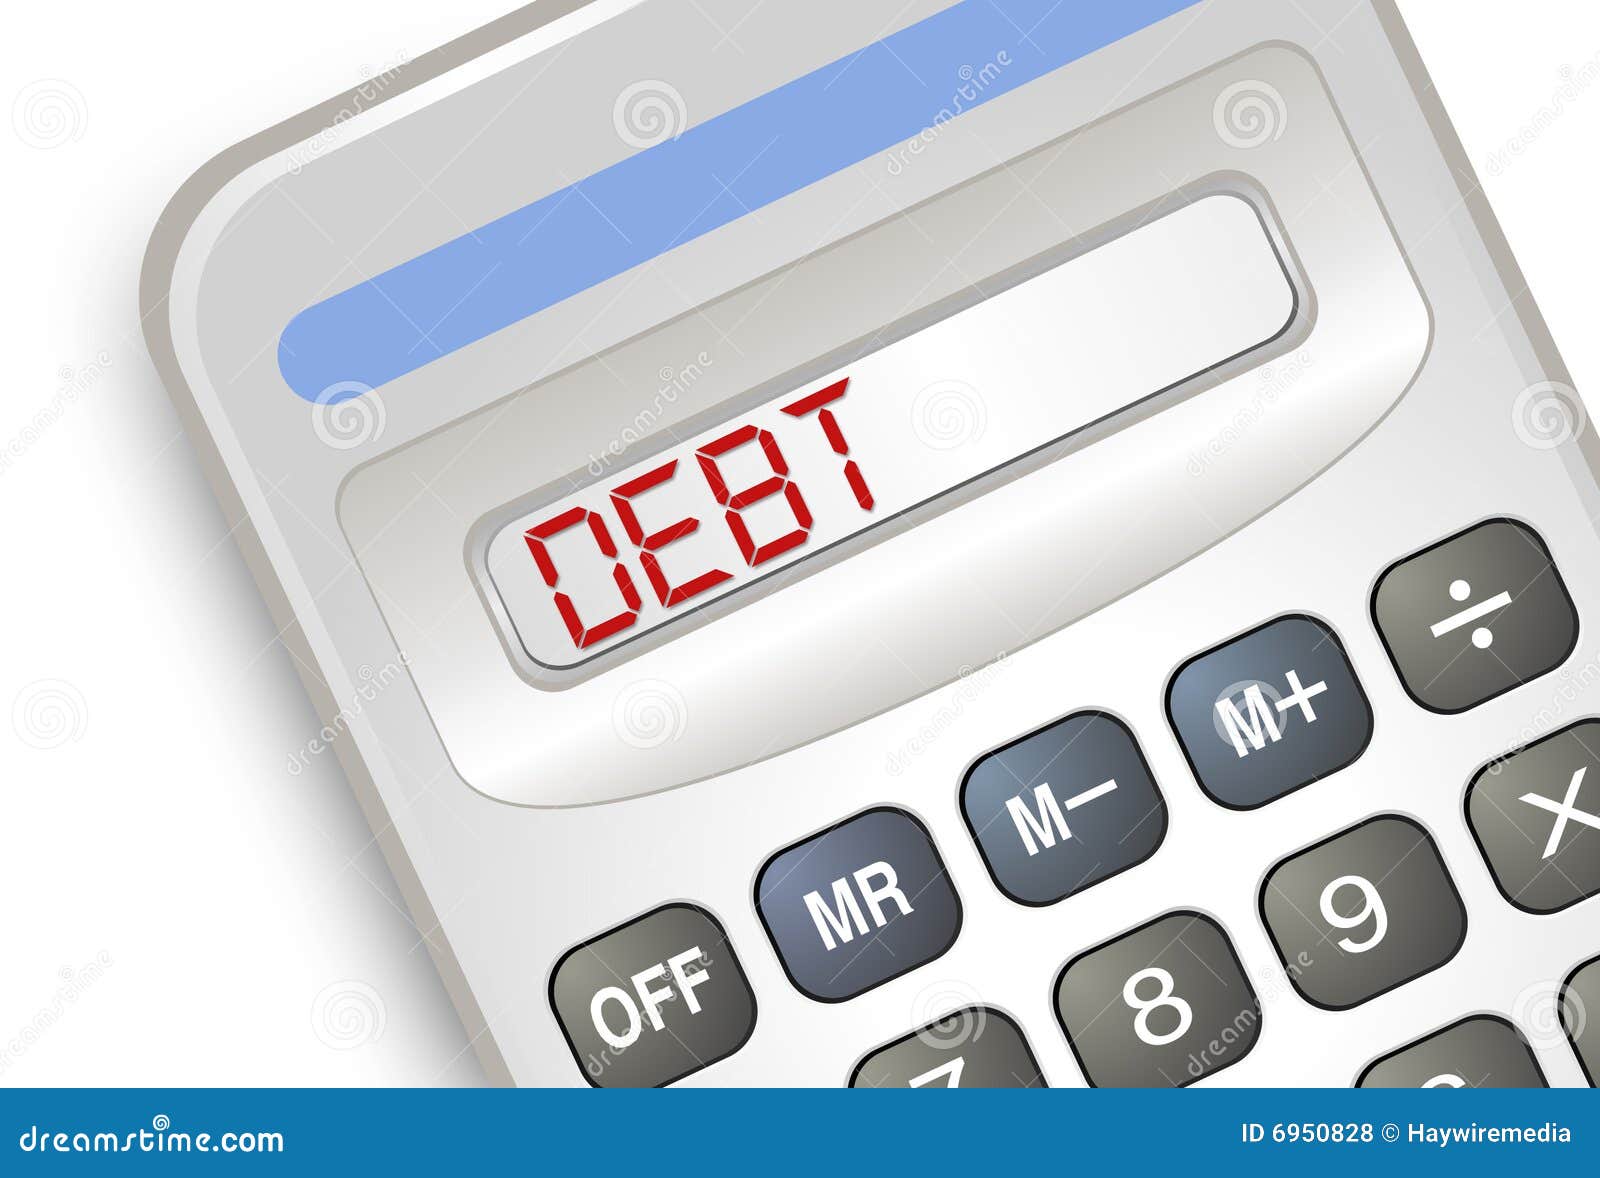 debt-calculator-6950828.jpg